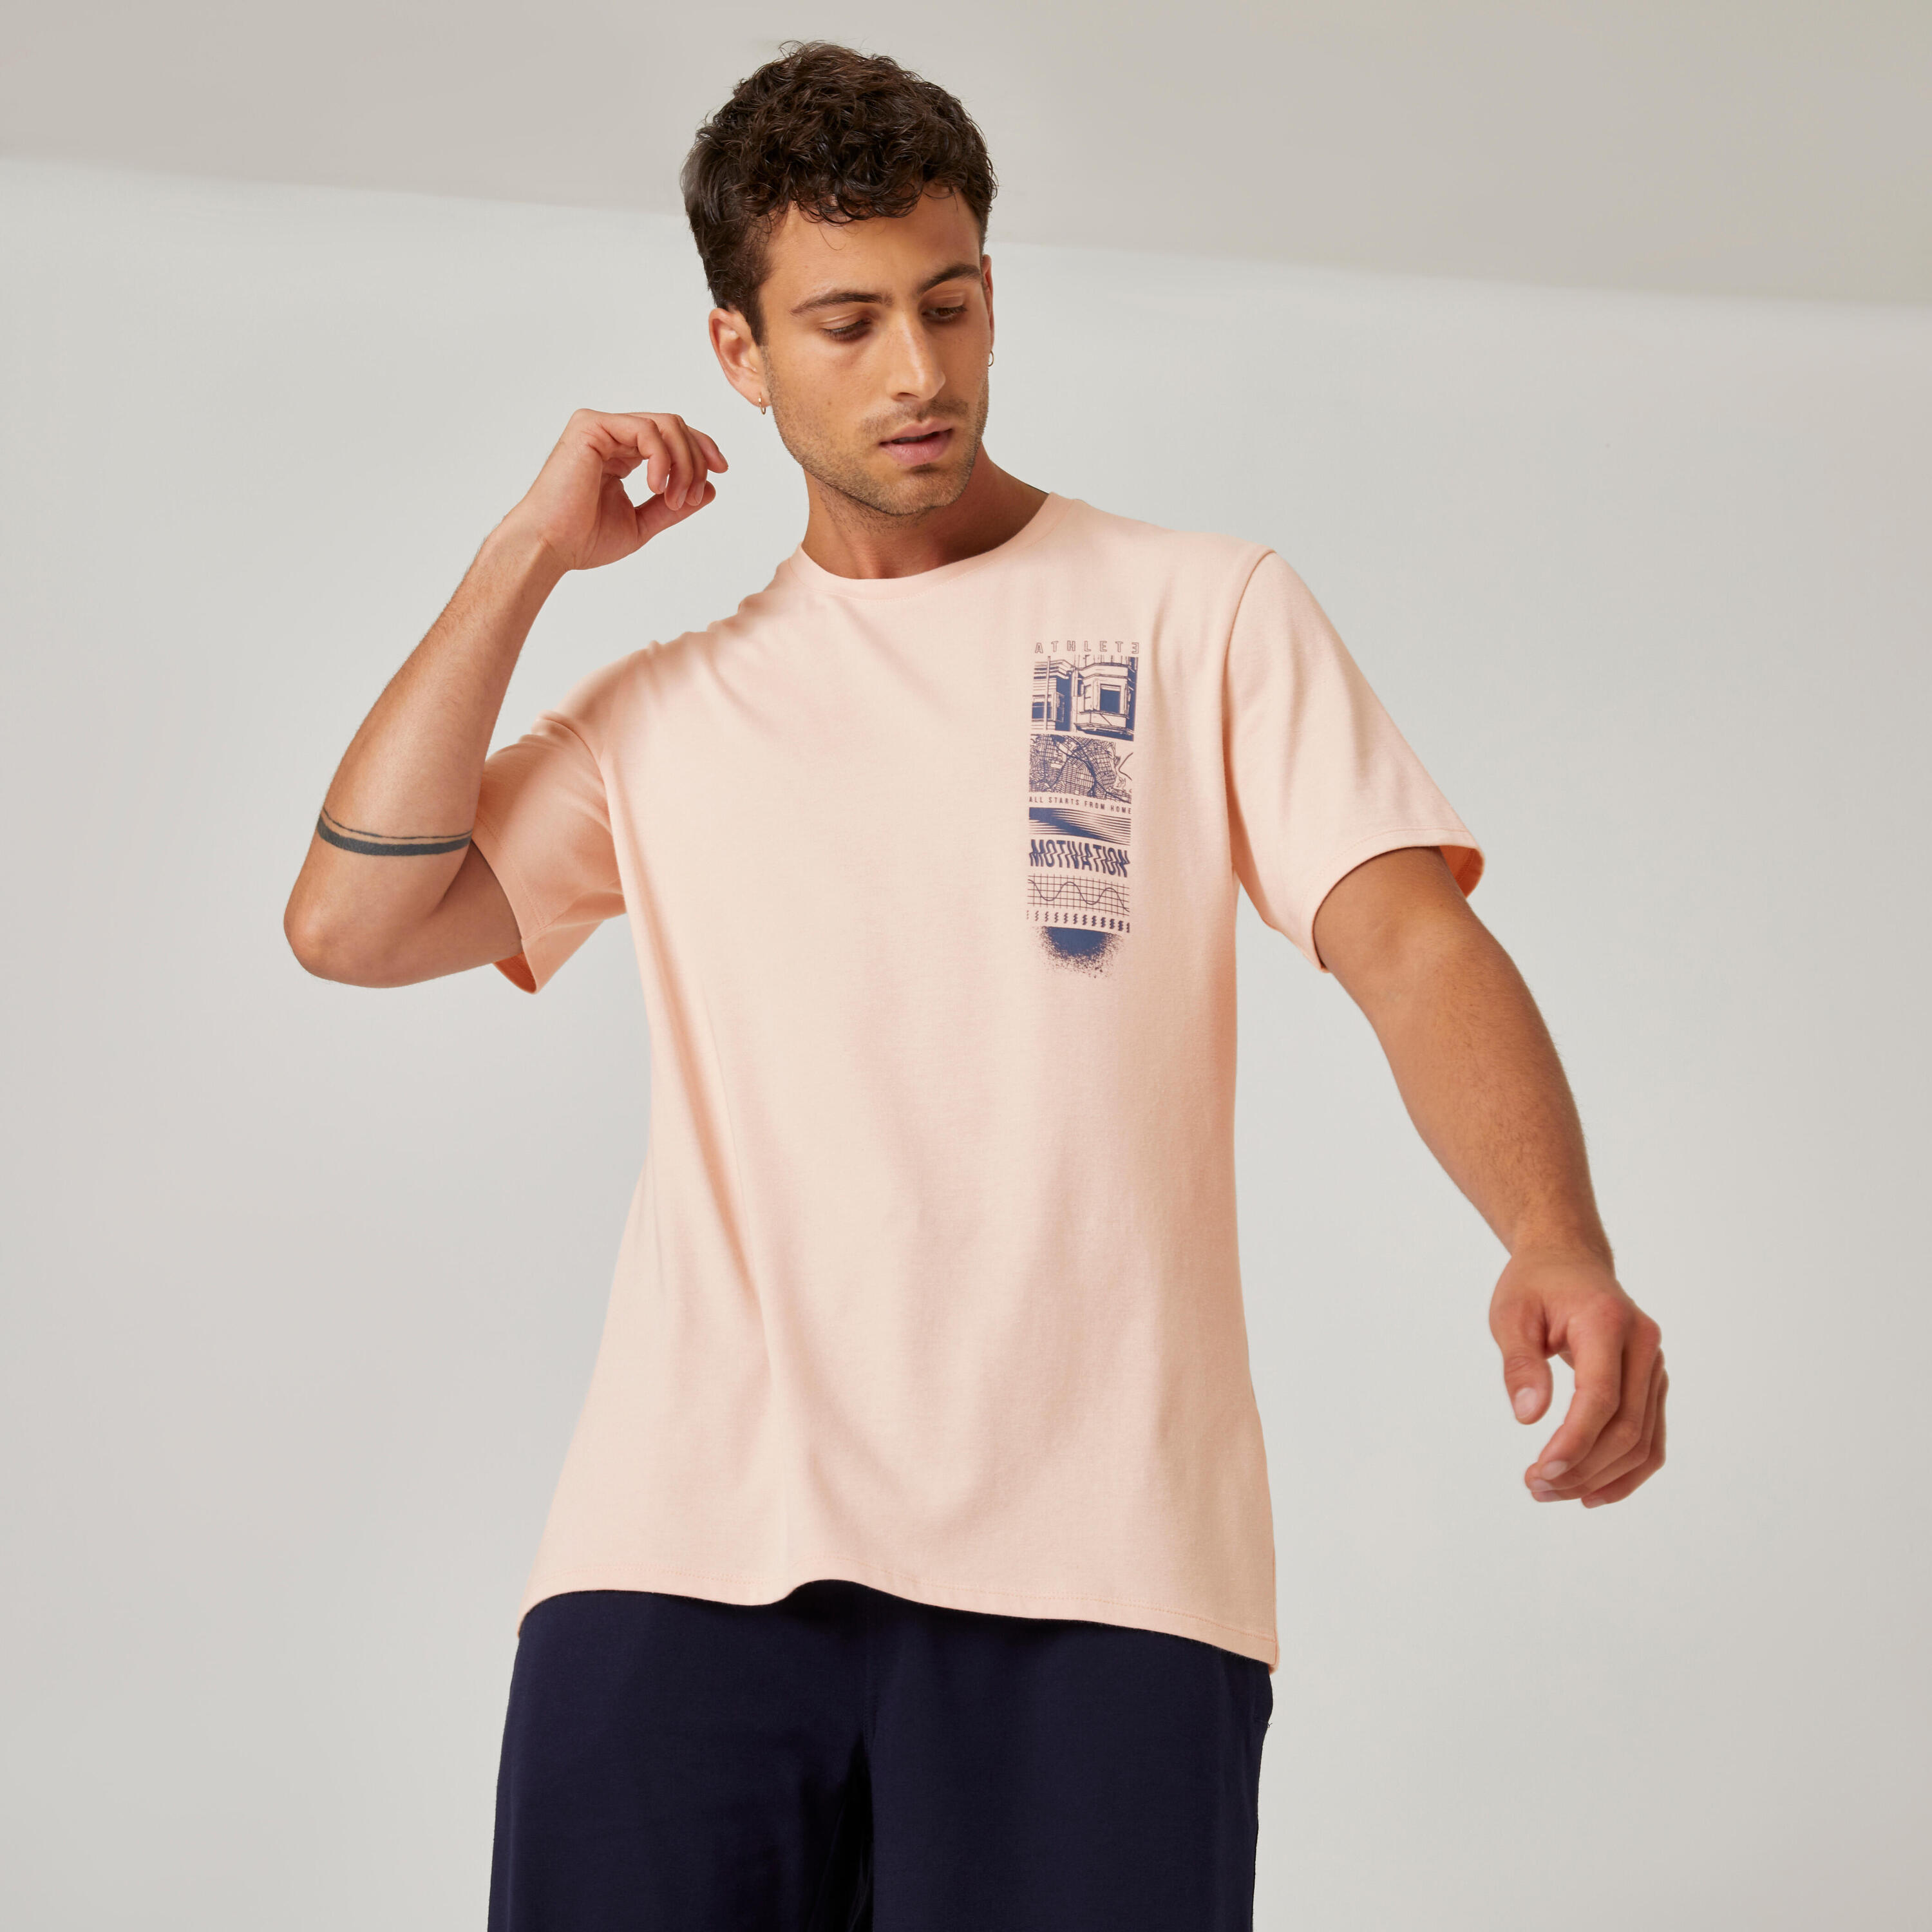 Men's Short-Sleeved Straight-Cut Crew Neck Cotton Fitness T-Shirt 500 - Pink Print 1/6